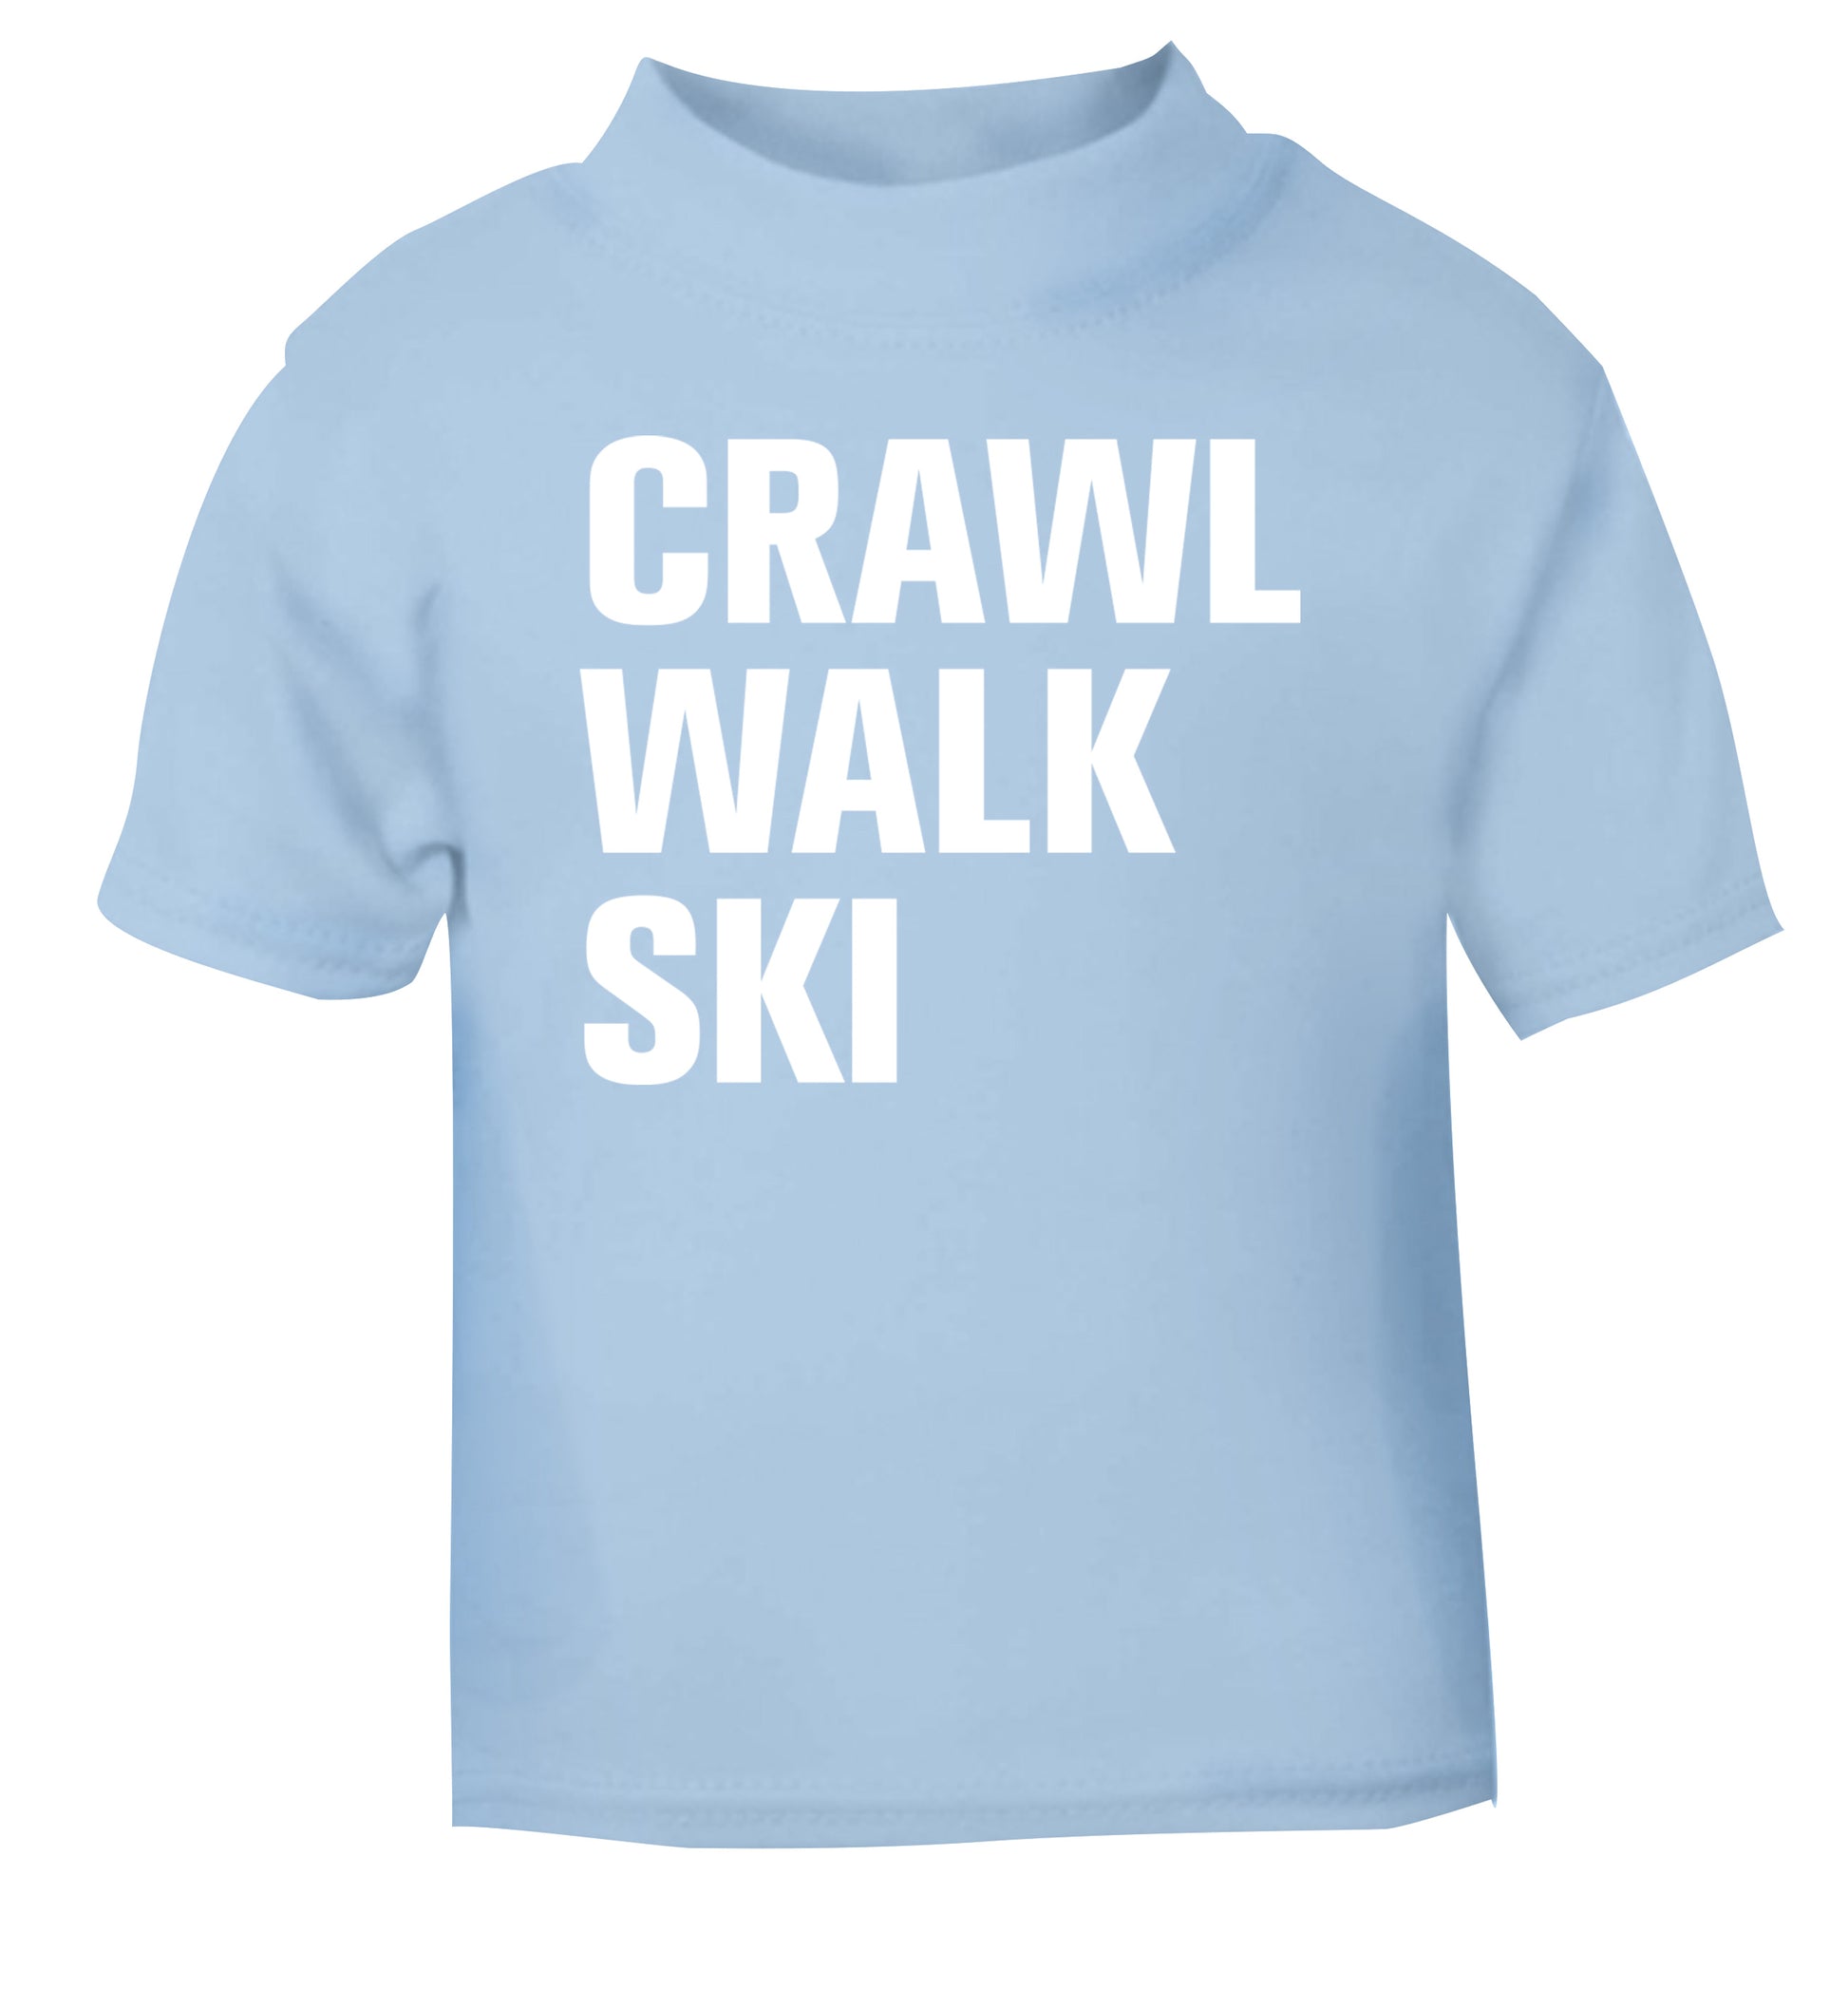 Crawl walk ski light blue Baby Toddler Tshirt 2 Years